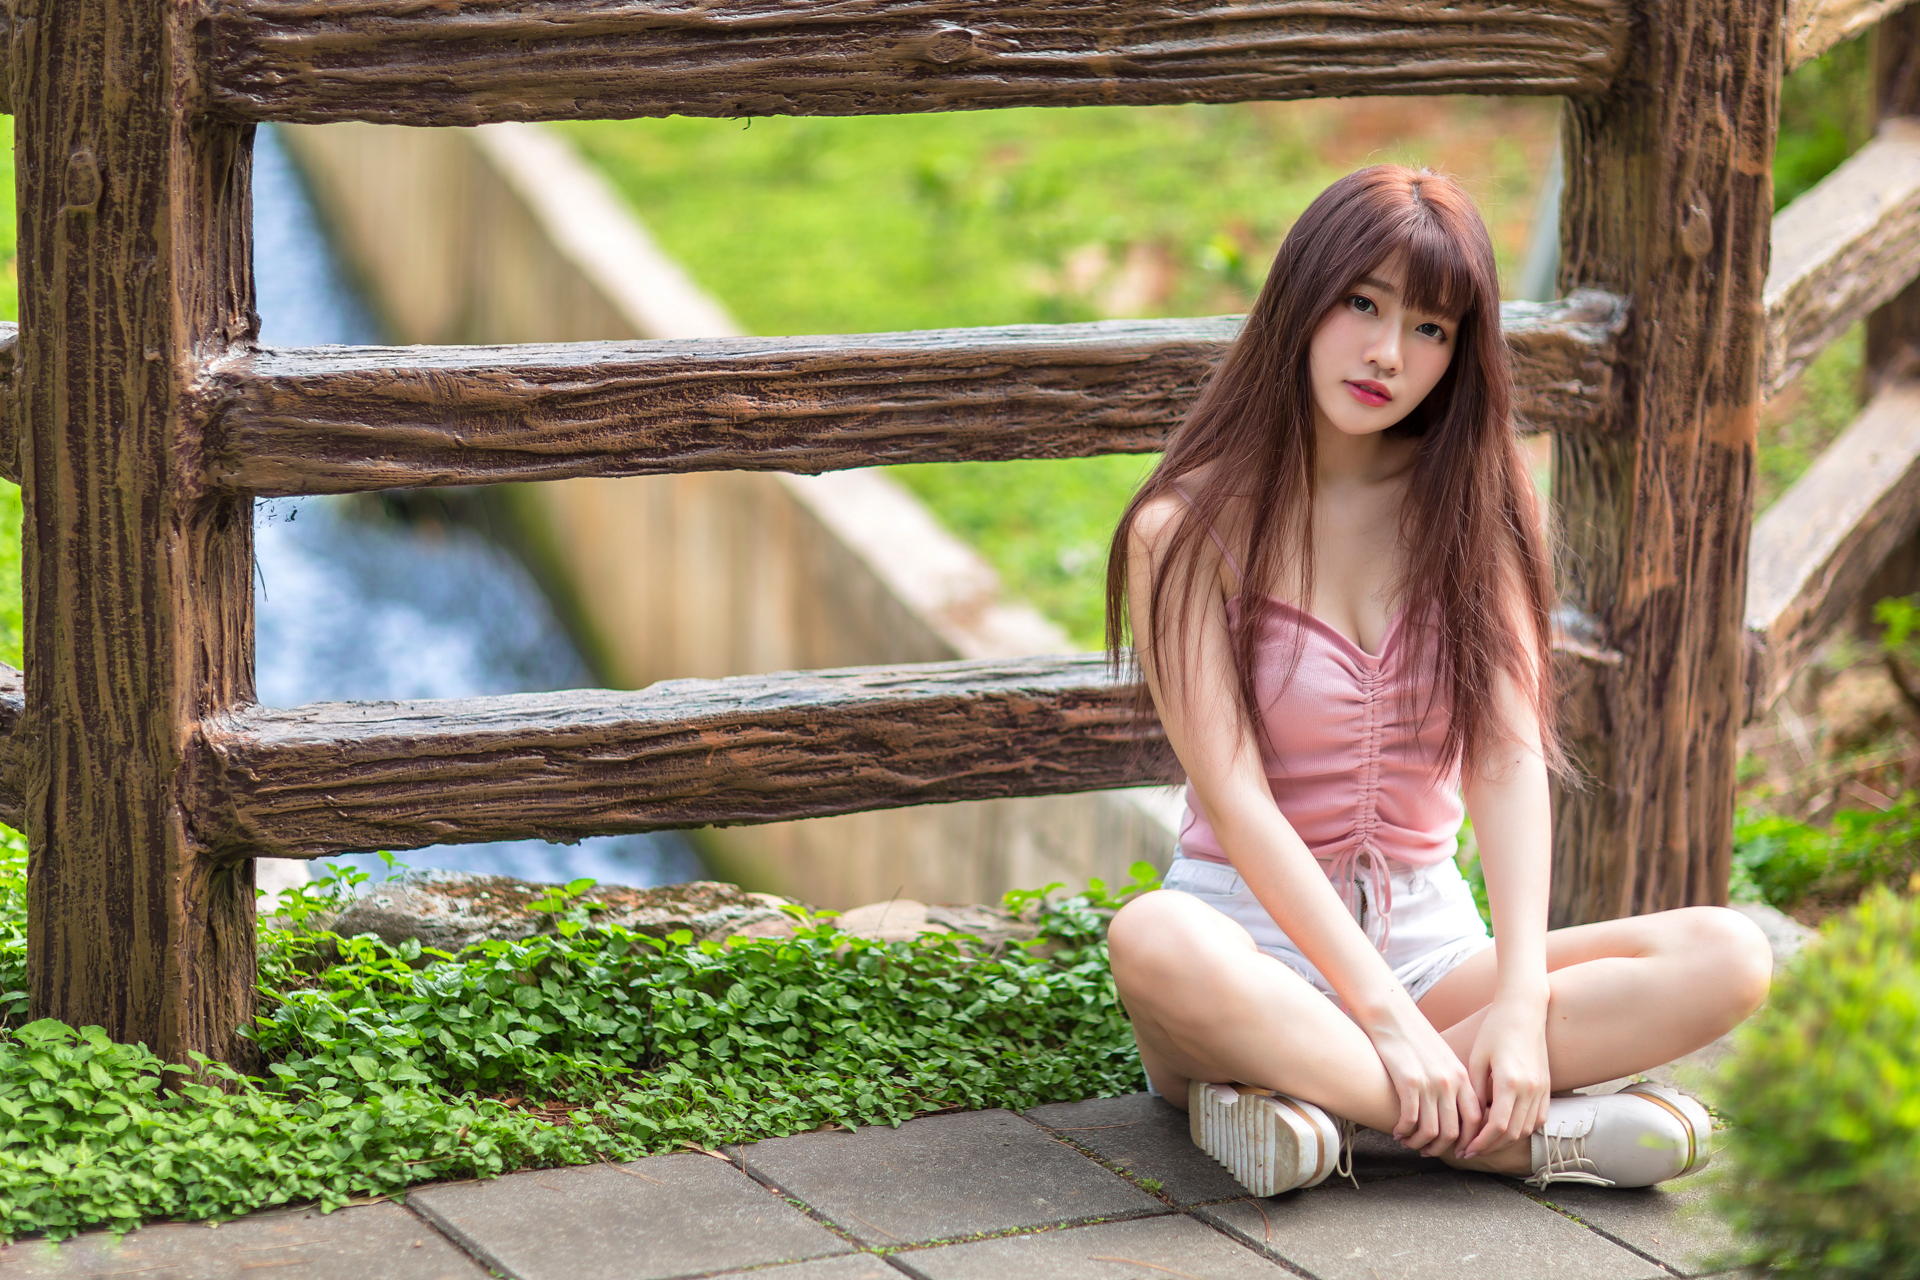 Asian Model Women Long Hair Brunette Sitting Legs Crossed Railings Grass Sneakers Shorts Pink Tops R 1920x1280